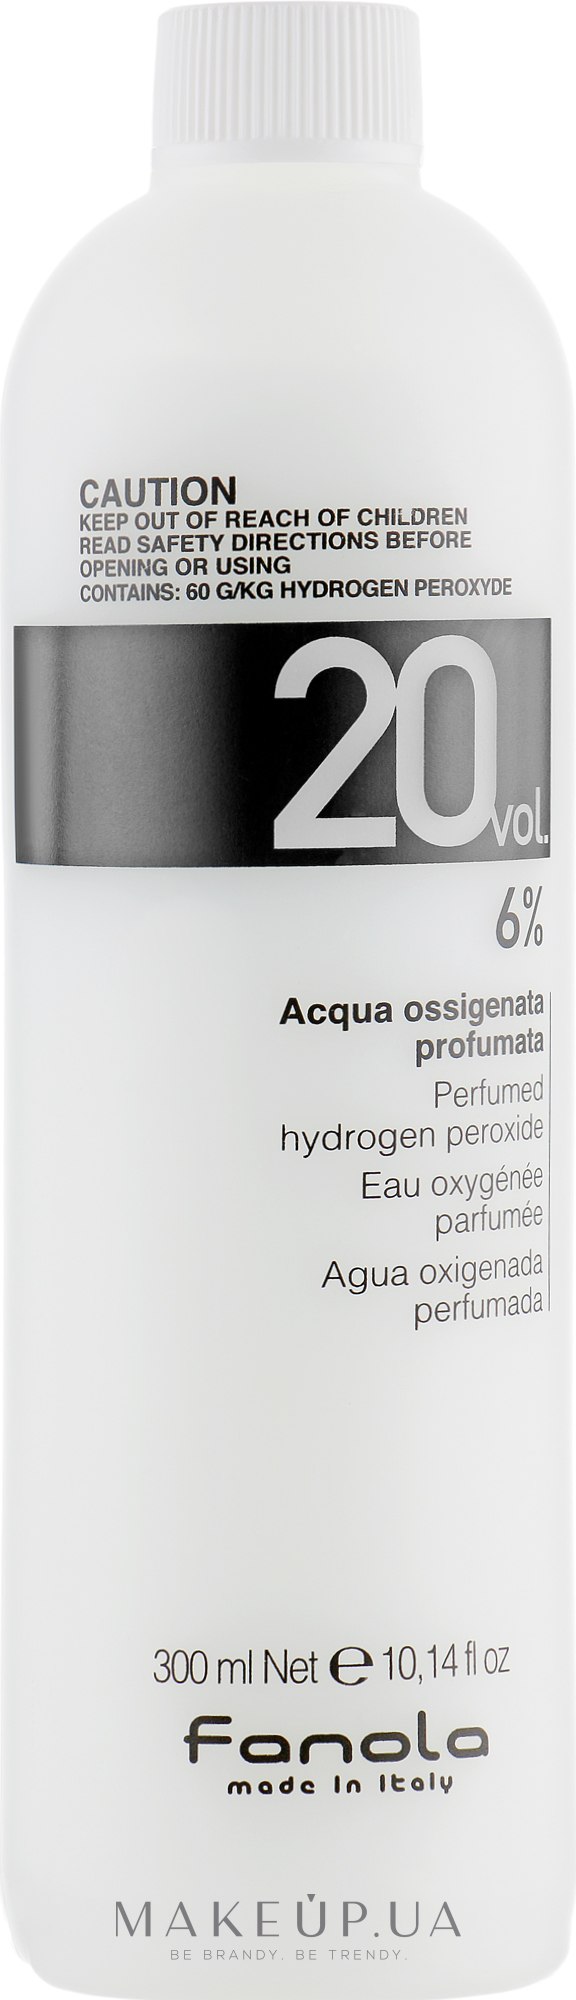 Окислитель 20 vol 6% - Fanola Perfumed Hydrogen Peroxide Hair Oxidant  — фото 300ml